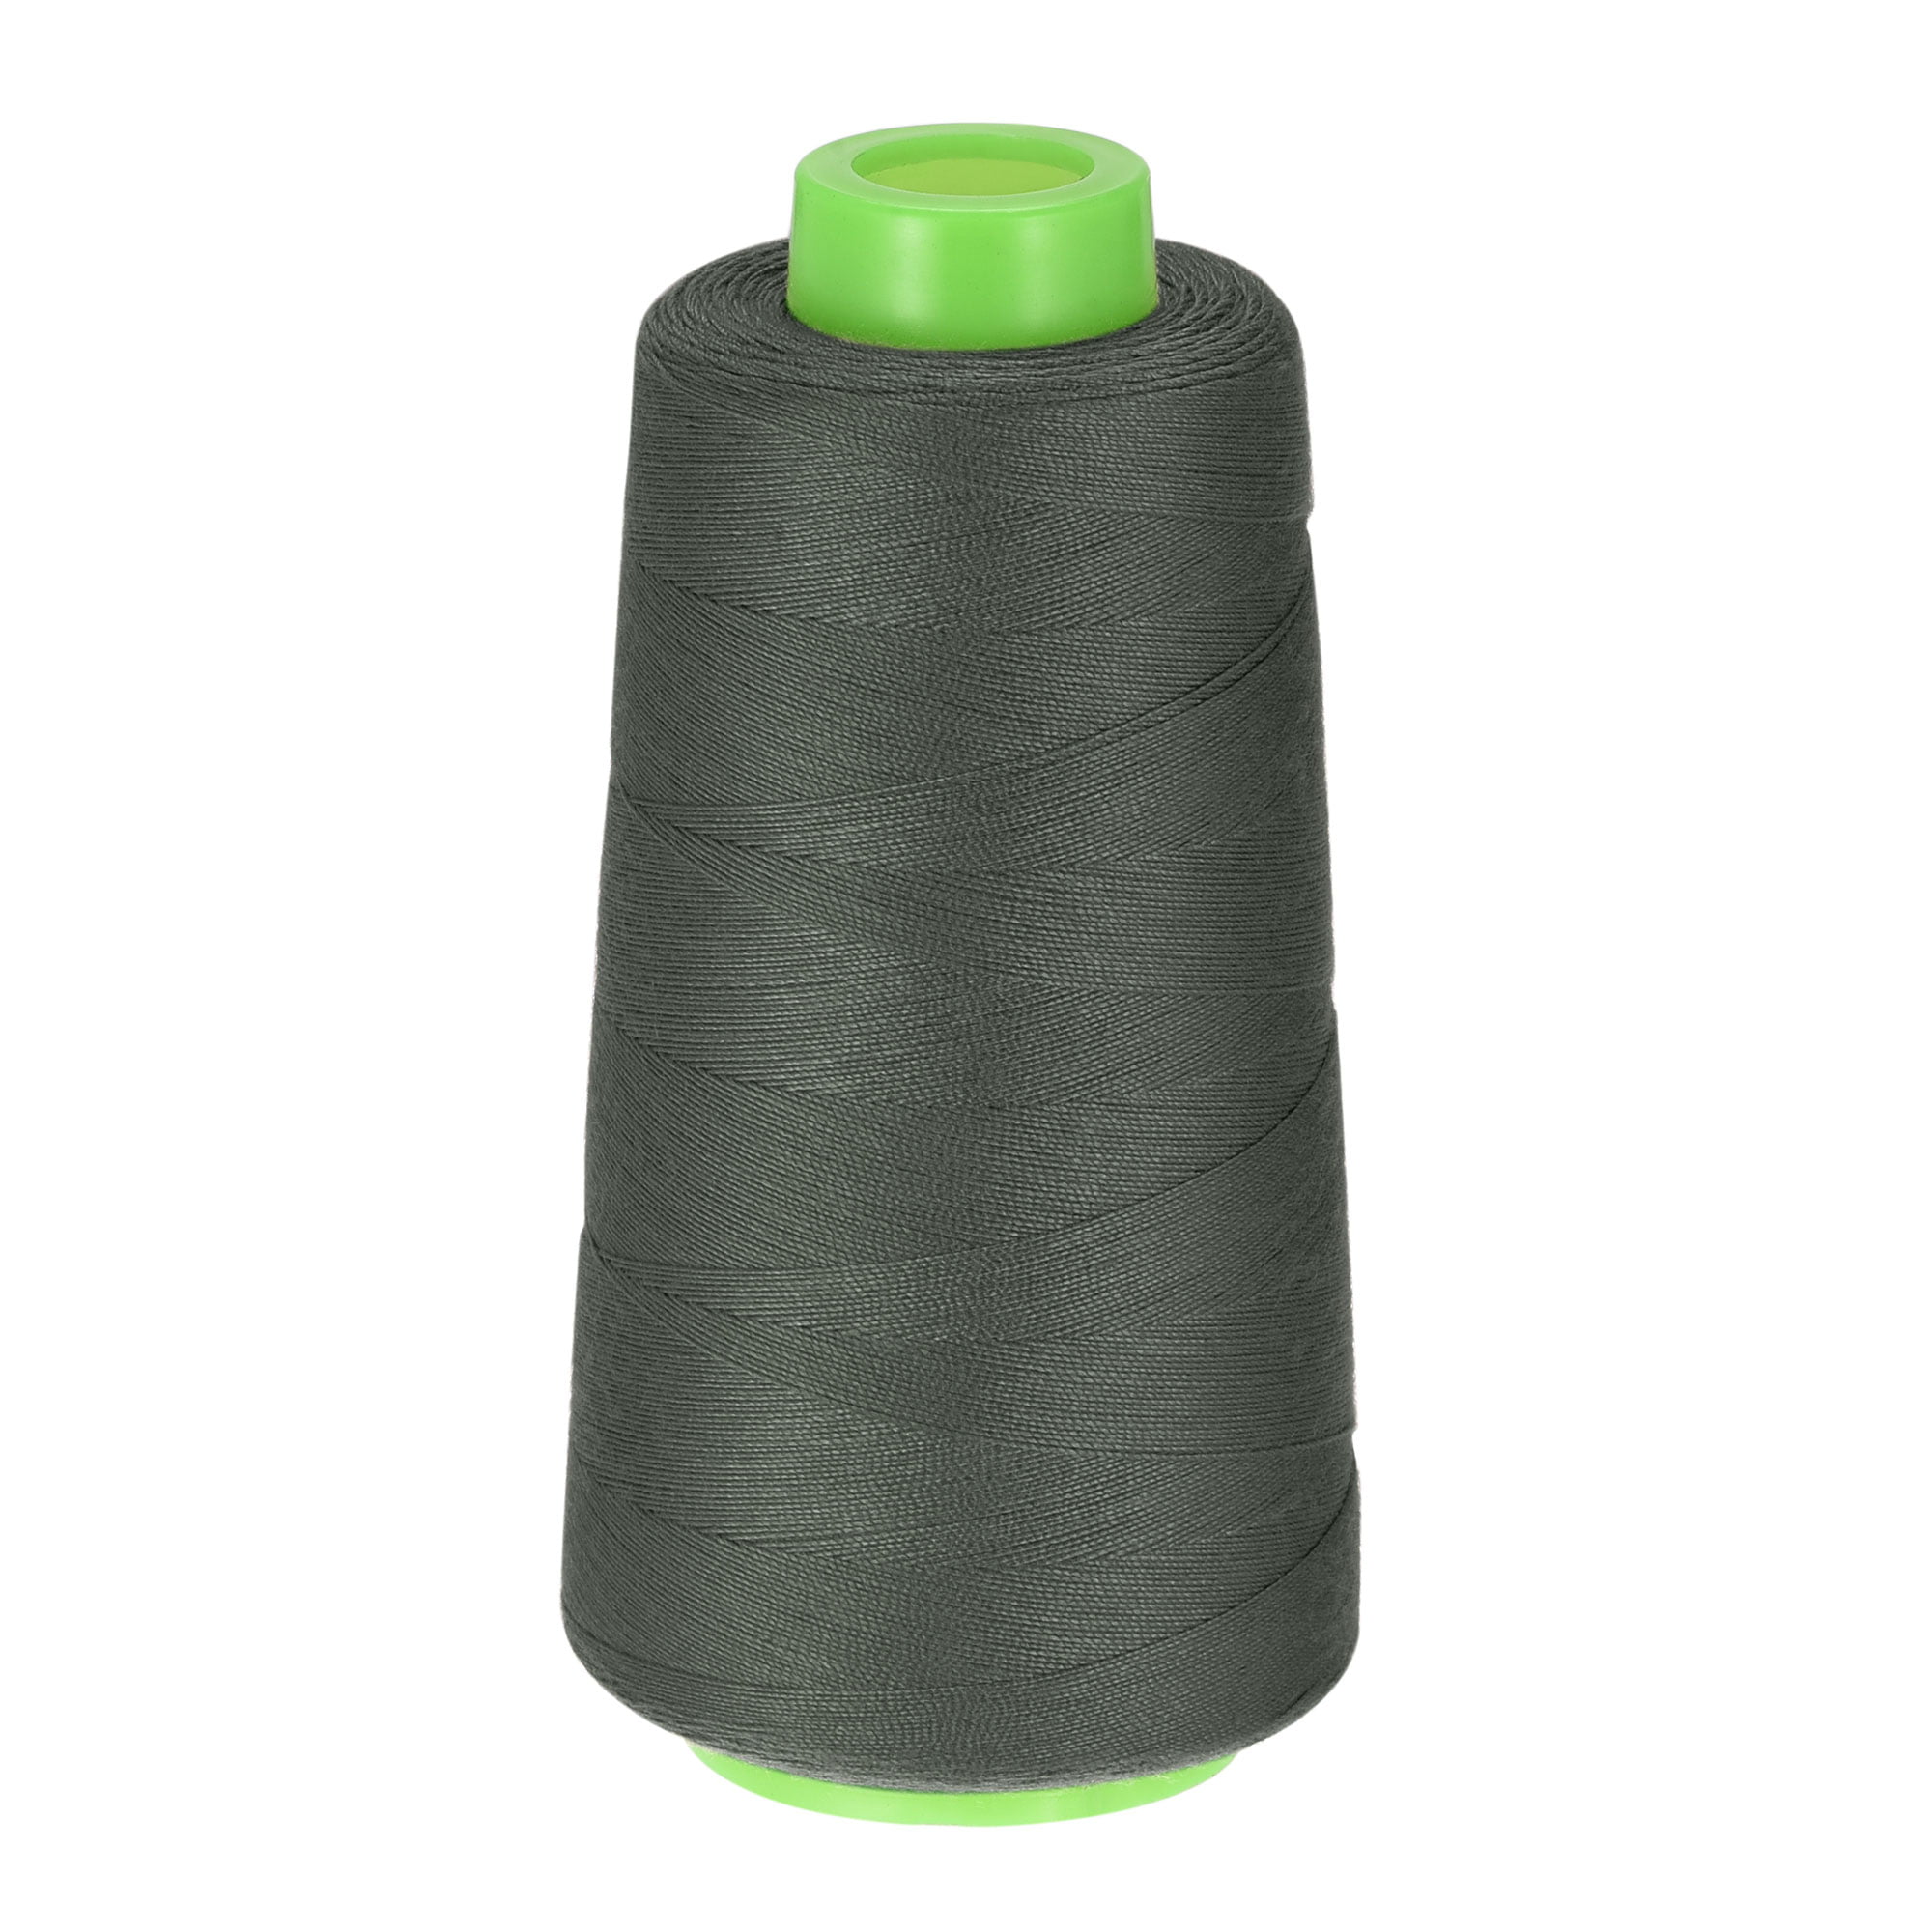 Pure silk sewing thread 200 yards grass green - Beautiful Silks